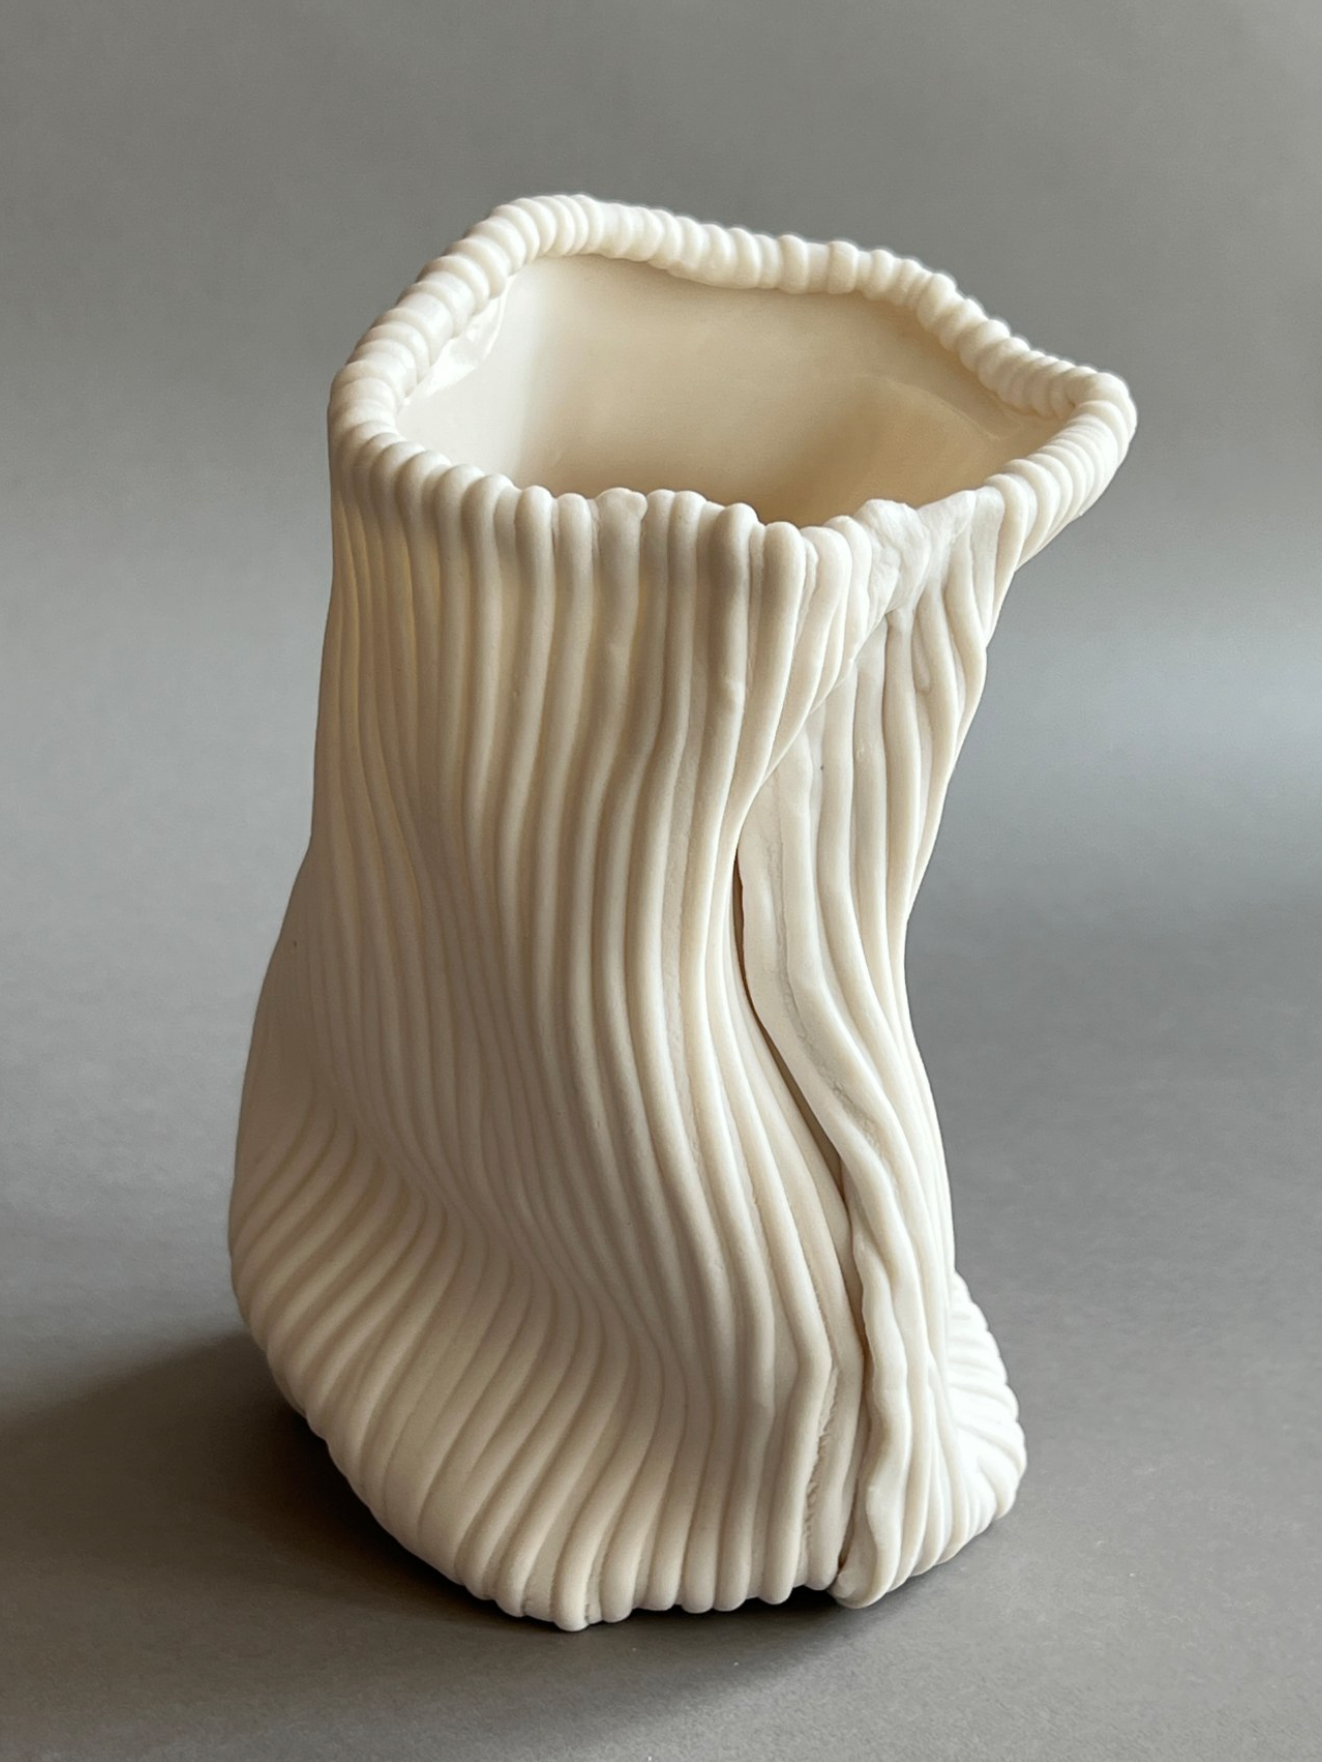 Drift Porcelain by Leah Kaplan